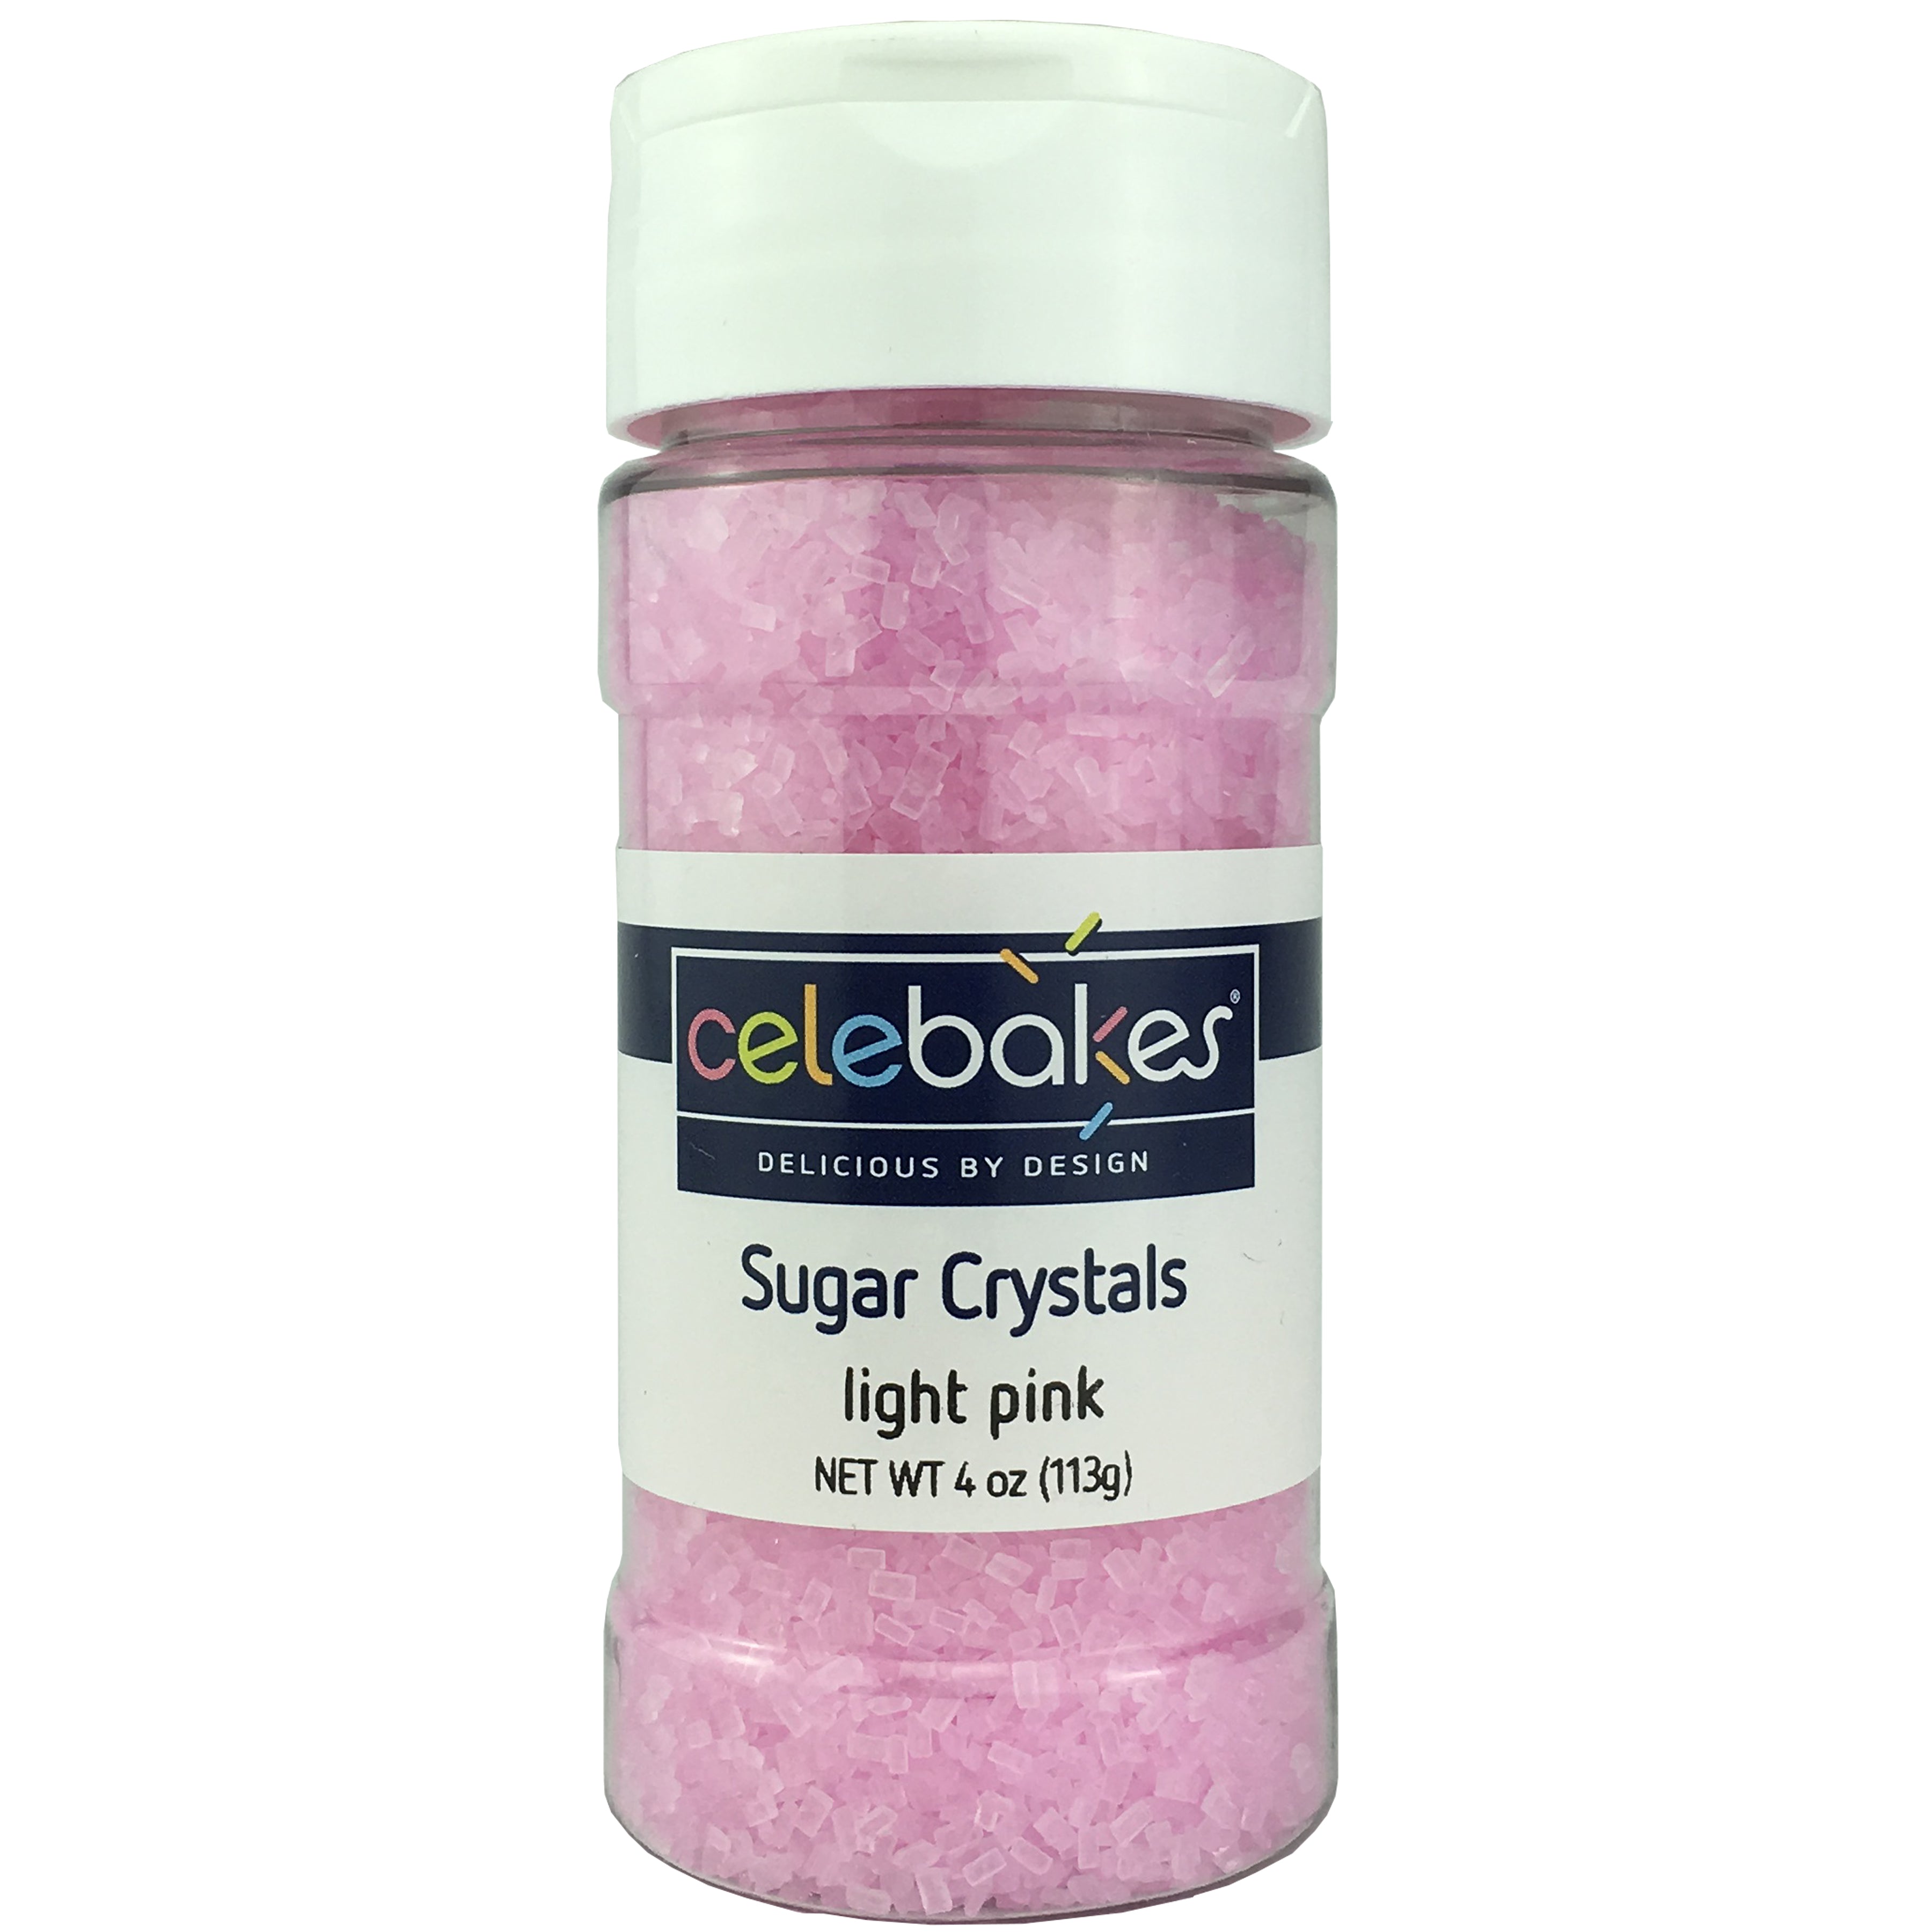 CK Sugar Crystals Pastel Pink 4oz/16oz CK Products Sprinkles - Bake Supply Plus